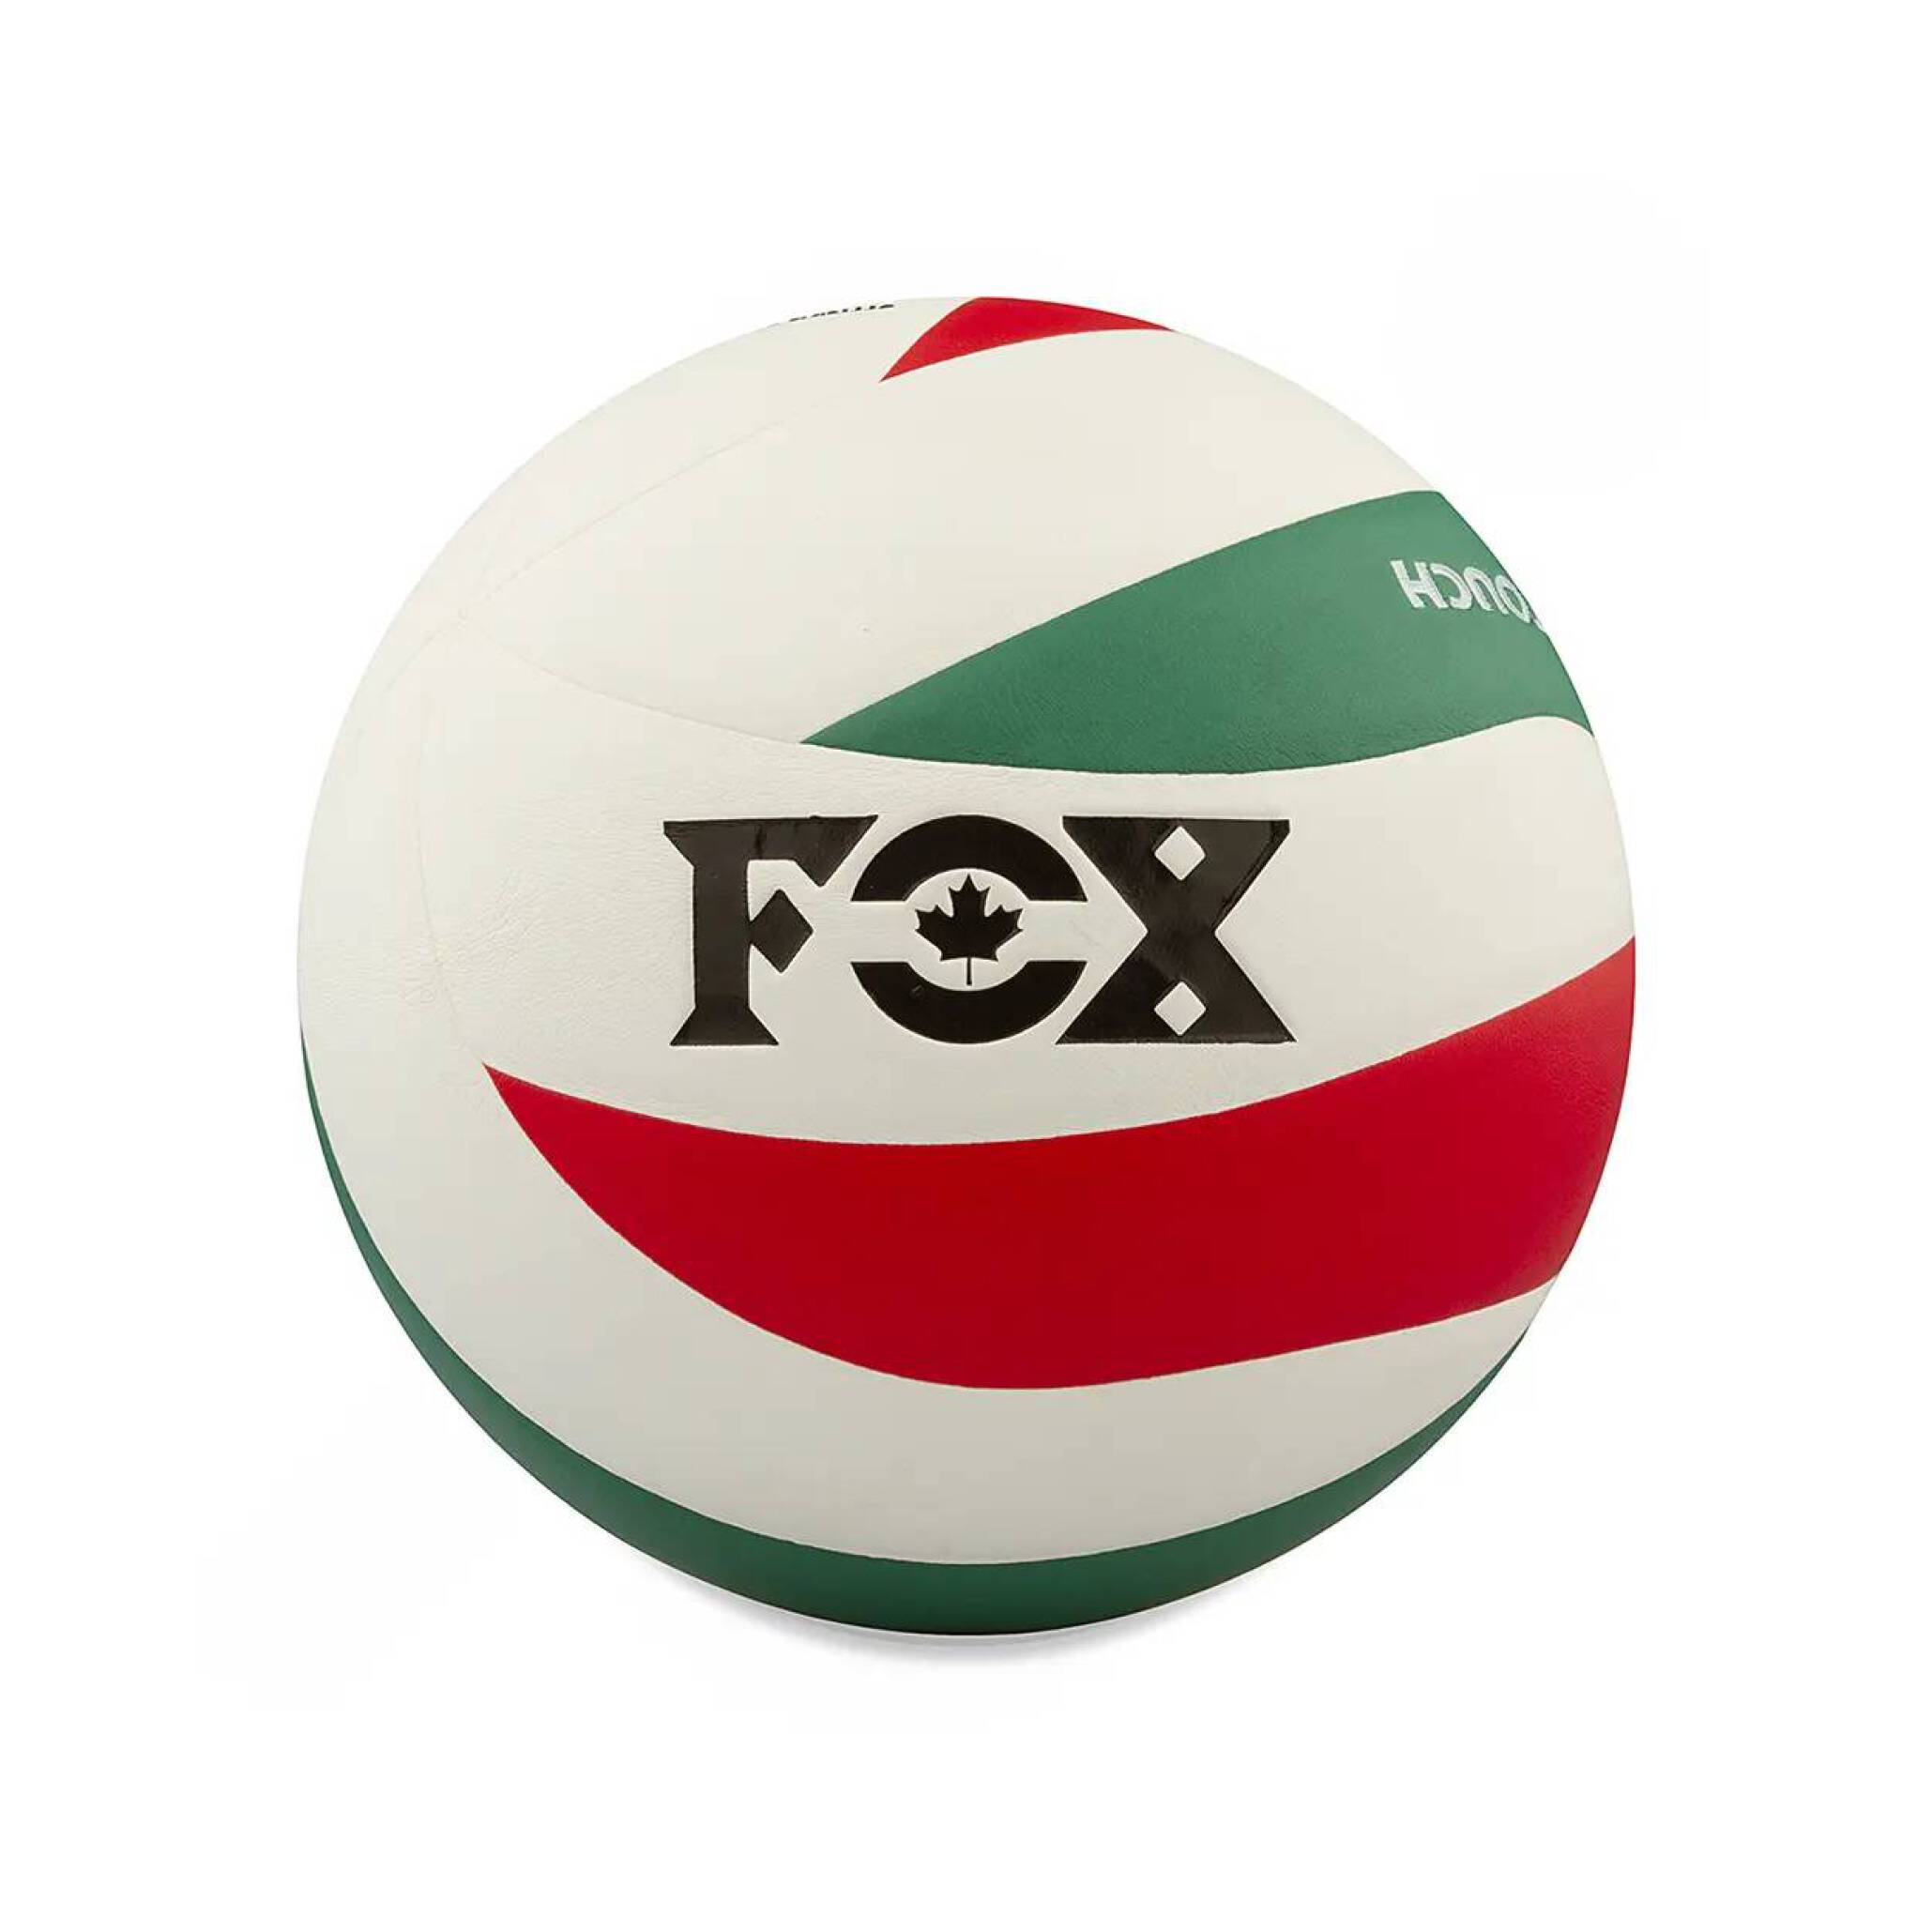  قیمت توپ والیبال فاکس FV5CO 1800 